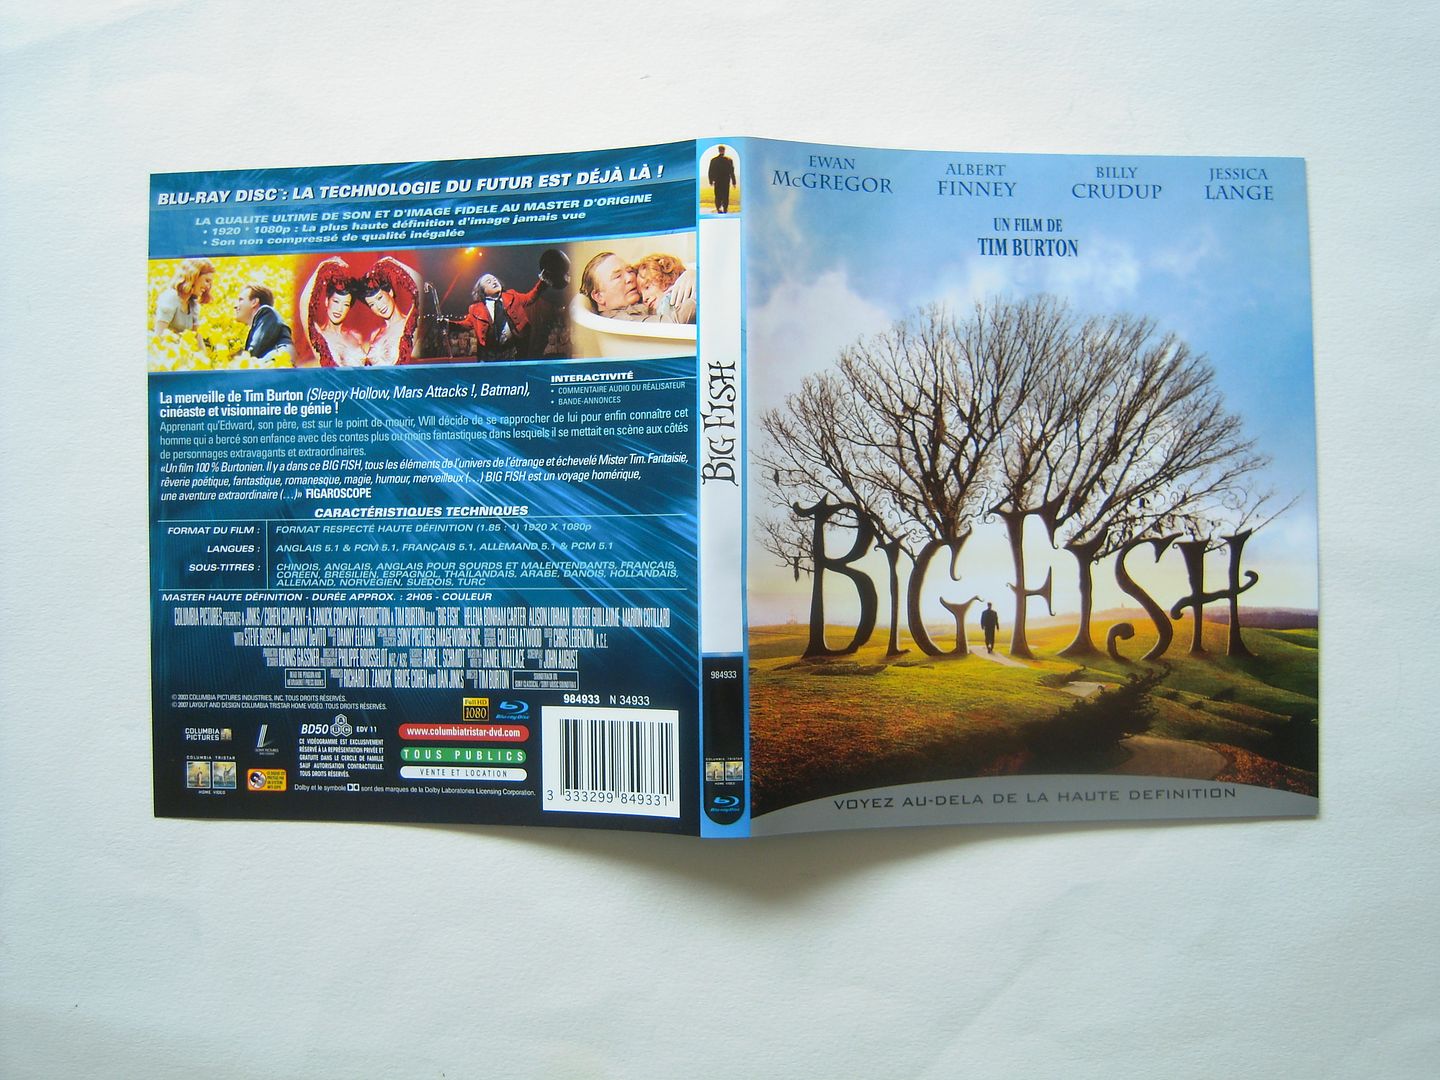 Big Fish - DVD/Bluray DSCN2367